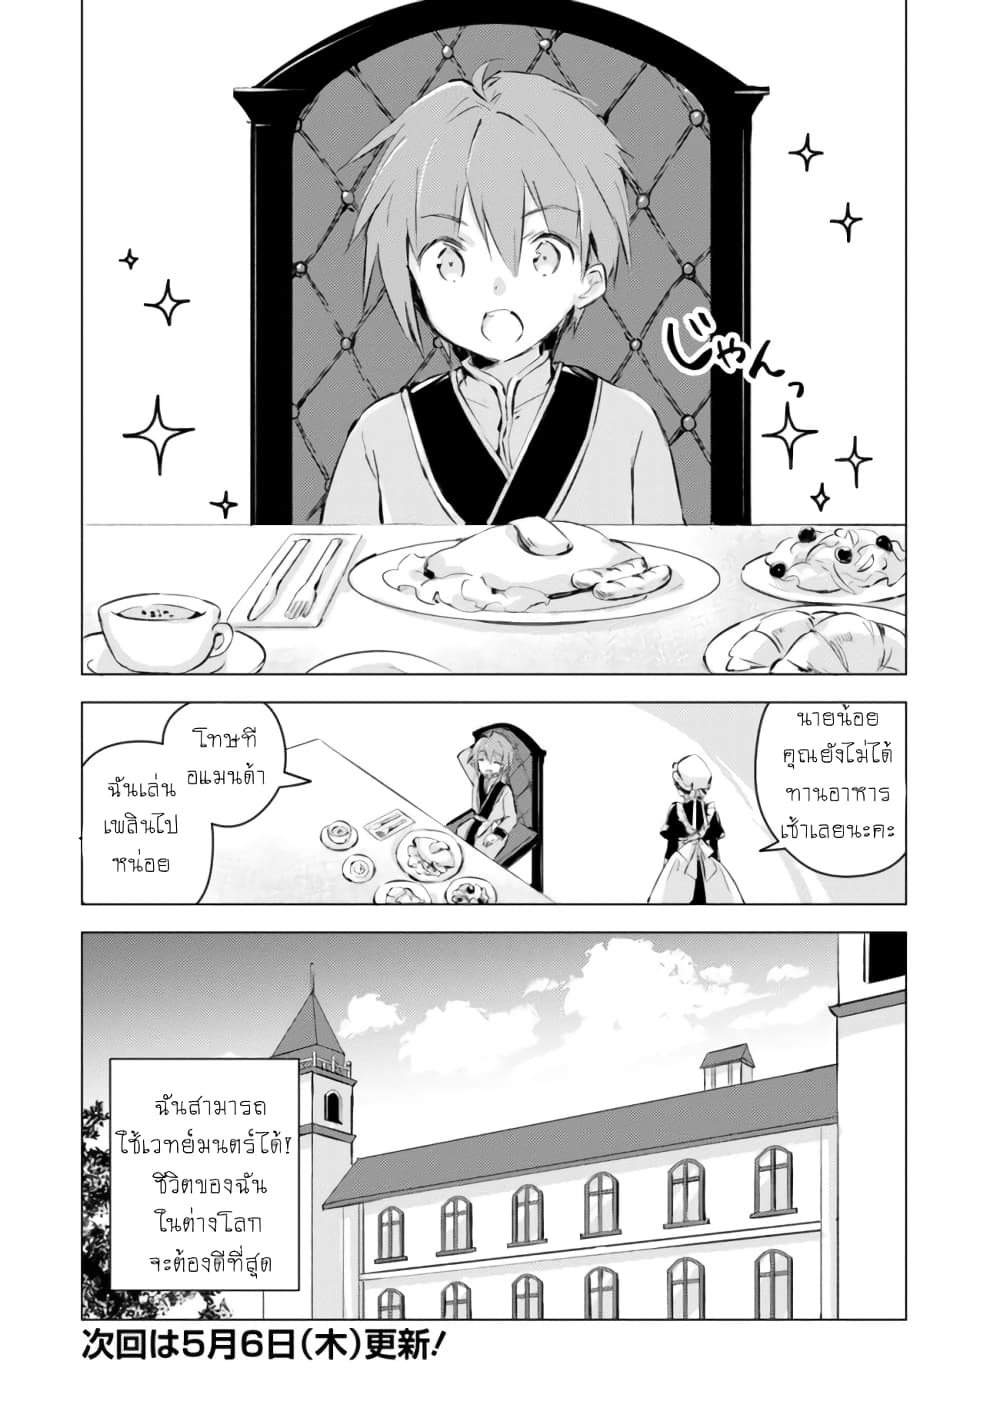 Manga wo Yomeru Ore ga Sekai Saikyou ตอนที่ 1 (16)